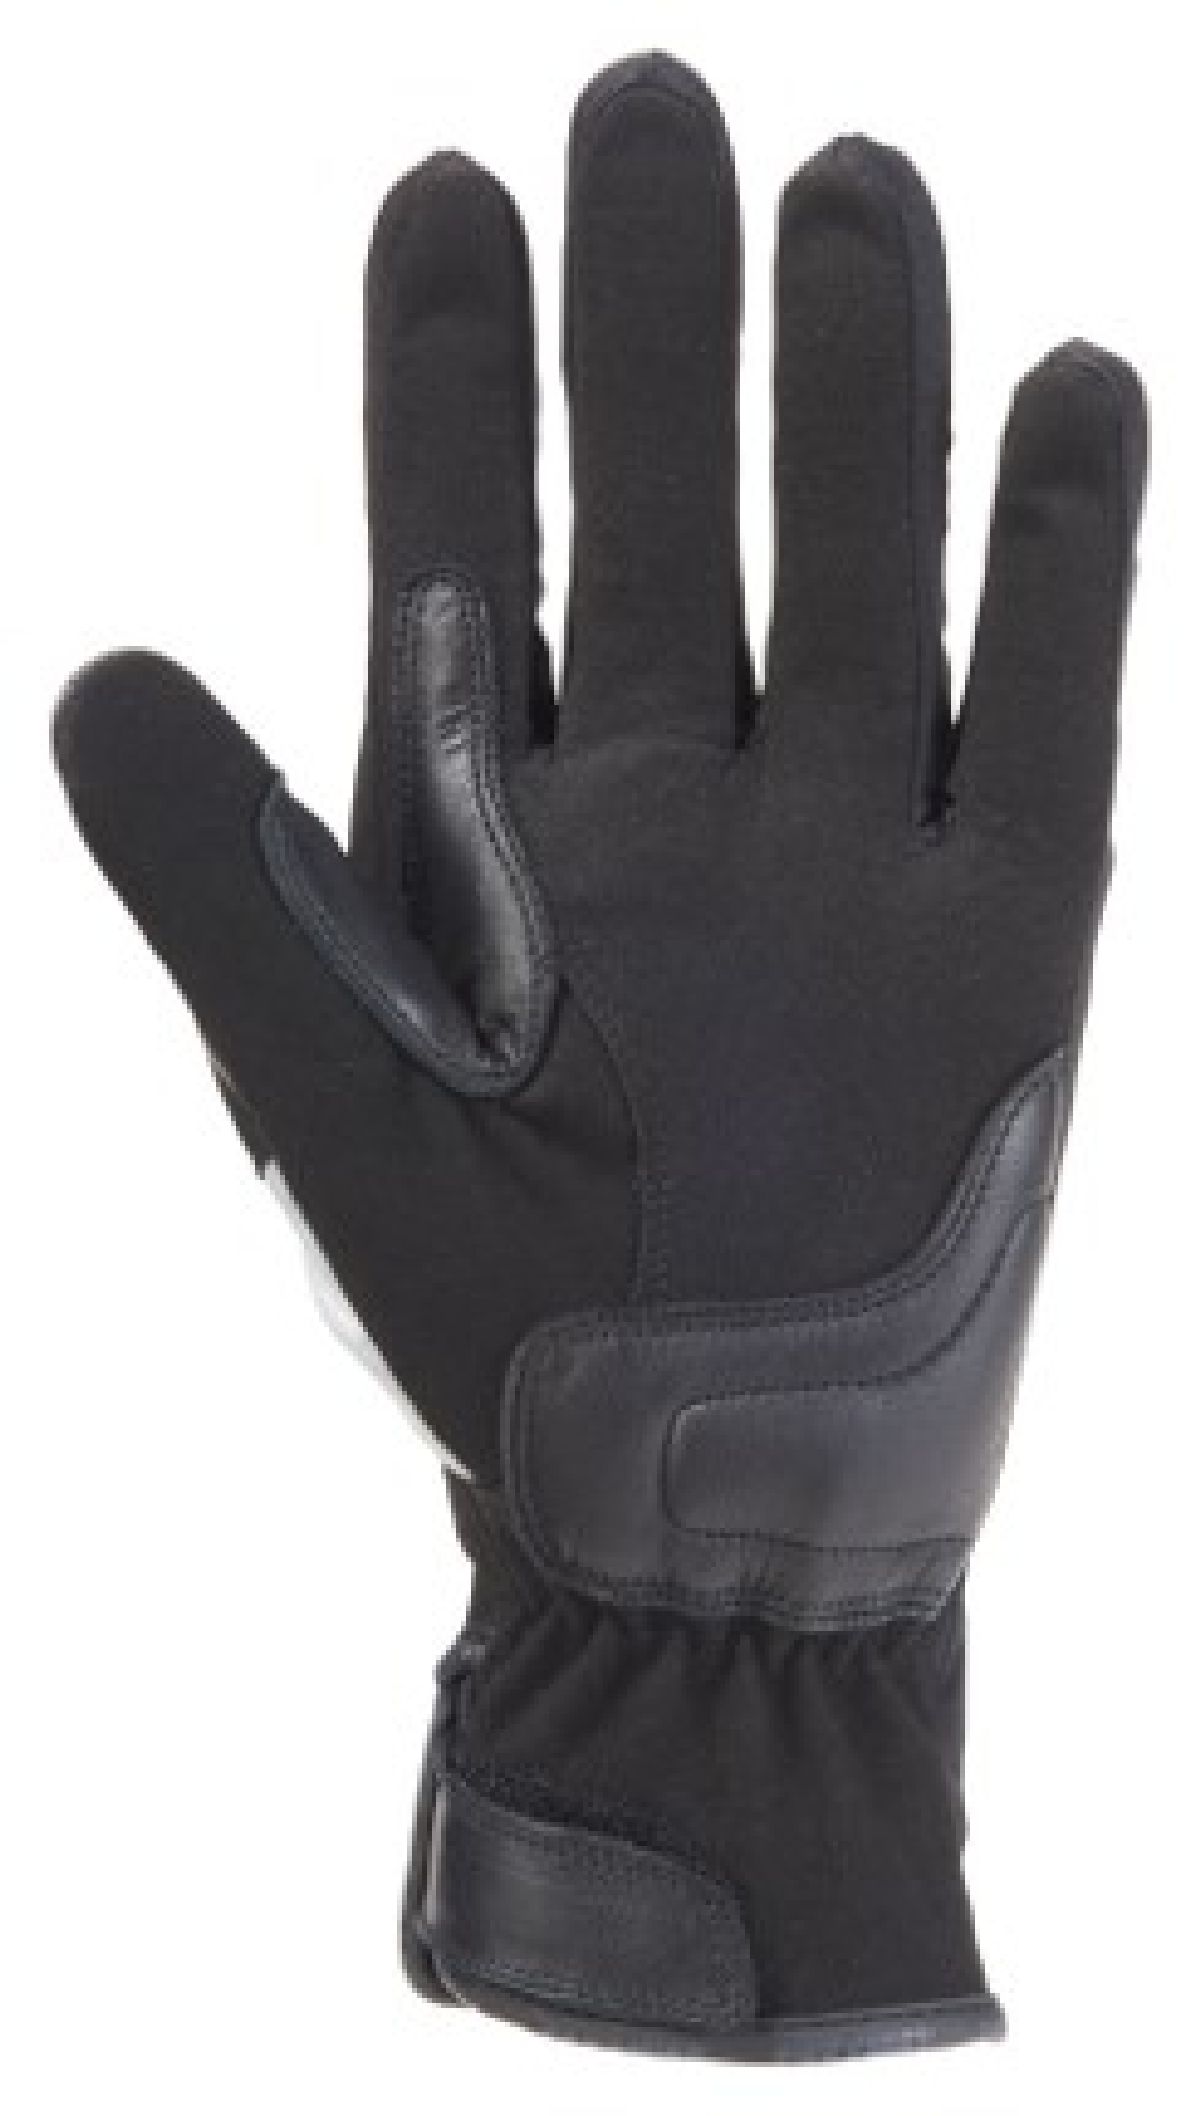 Easy II Handschuhe schwarz/grau M